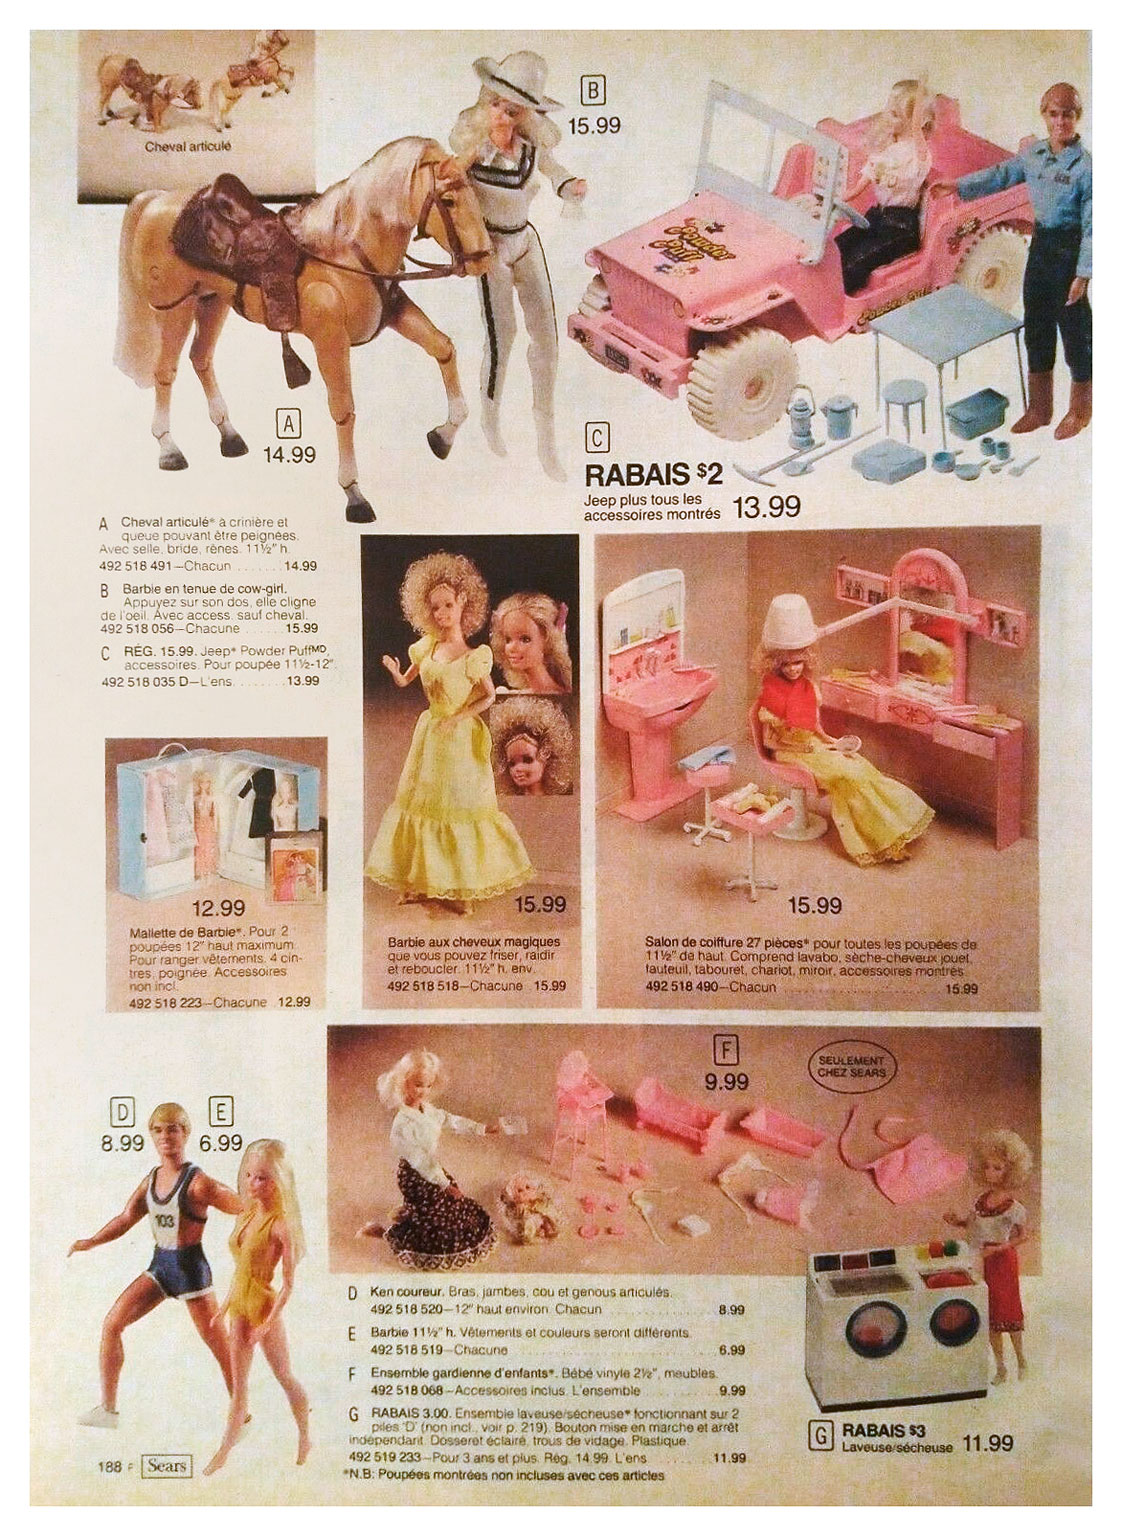 From 1982 Sears Cadeaux de Noël catalogue